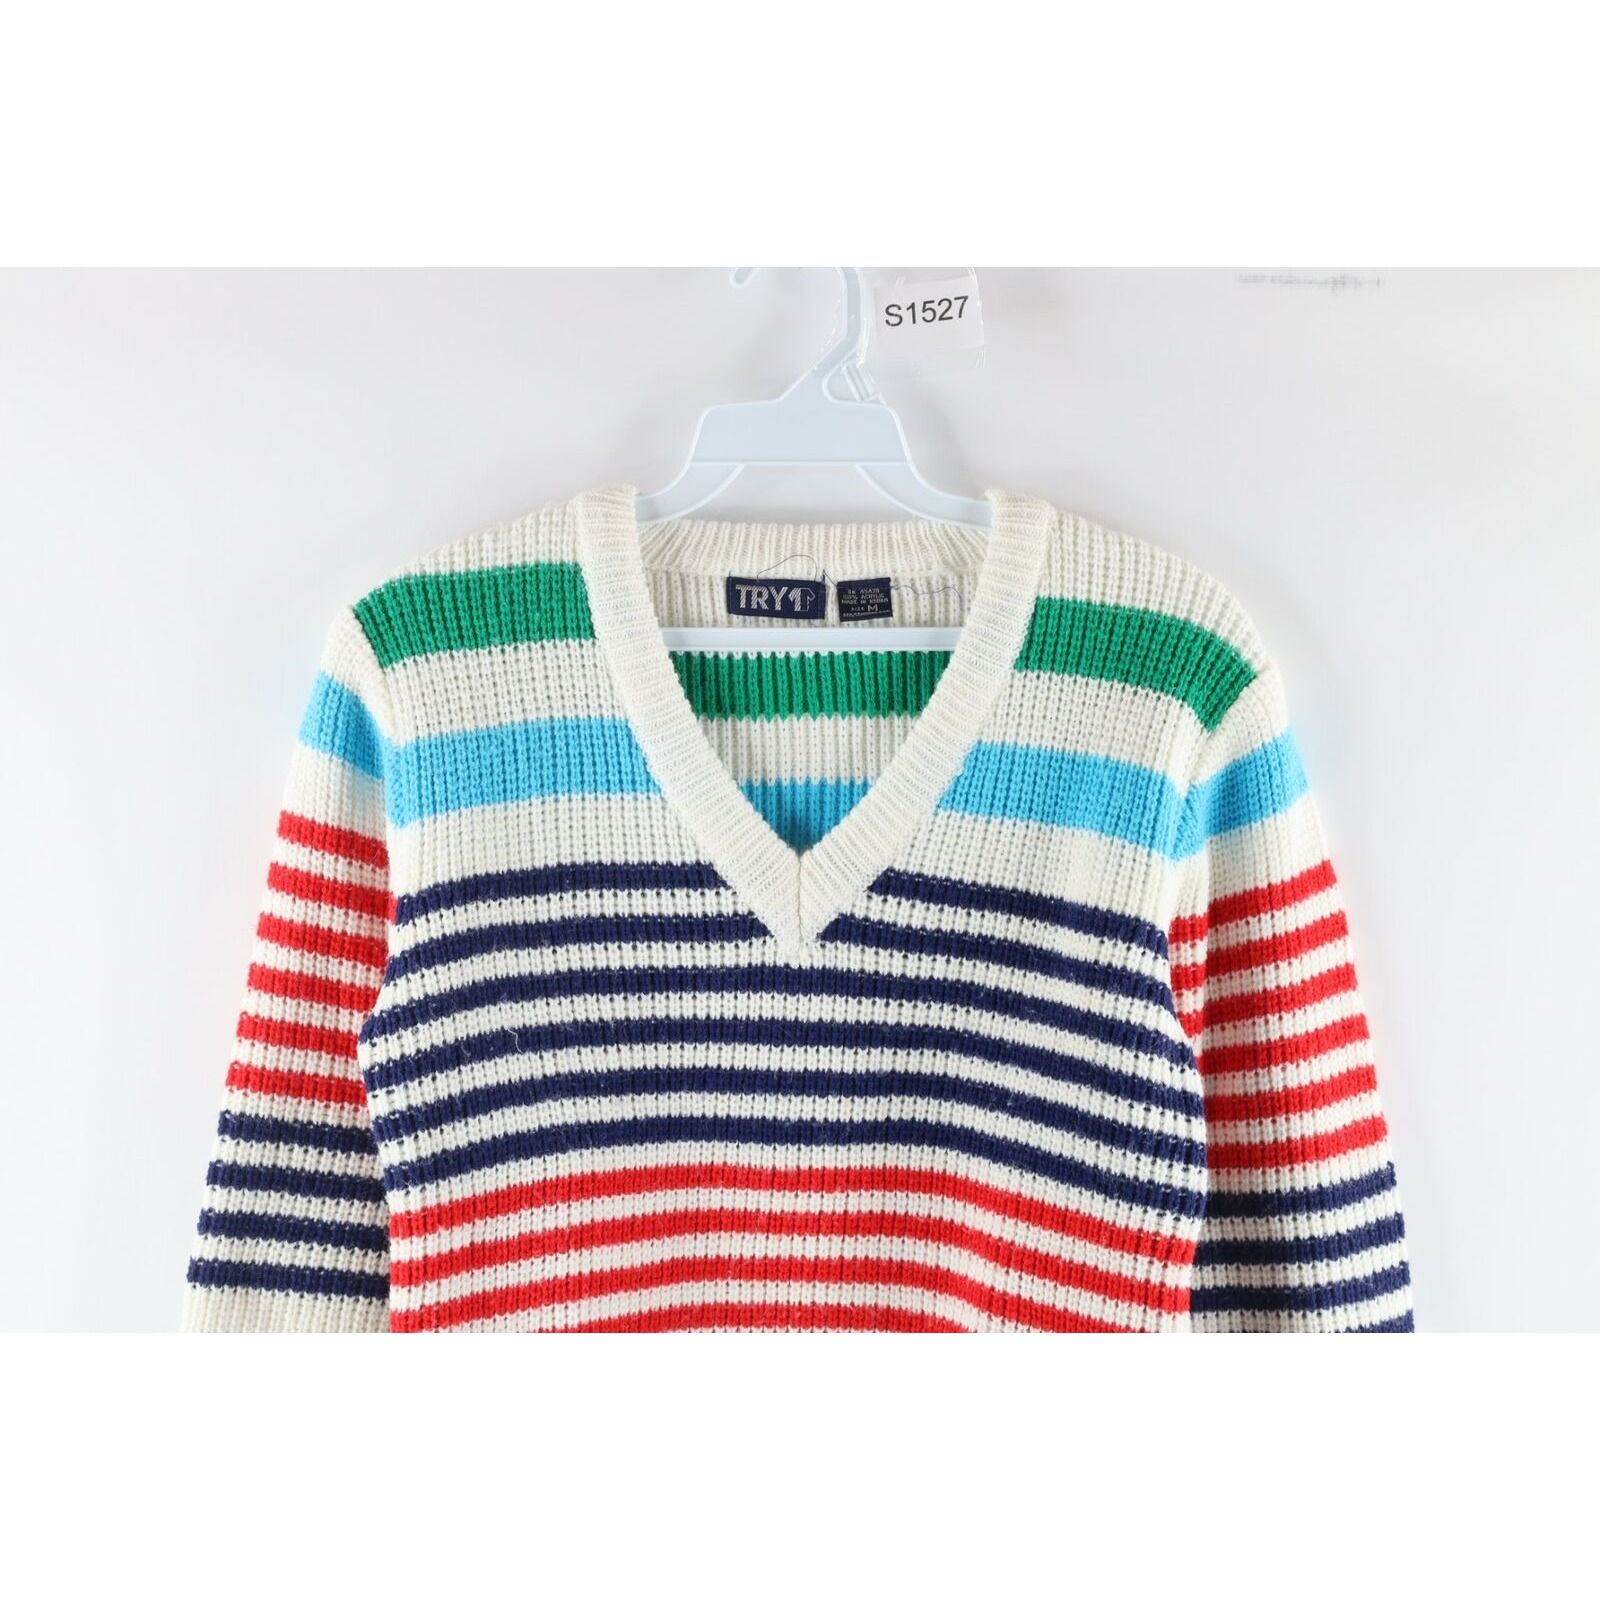 Vintage Vintage 70s Rockabilly Medium Rainbow Striped Knit Sweater Size M / US 6-8 / IT 42-44 - 2 Preview